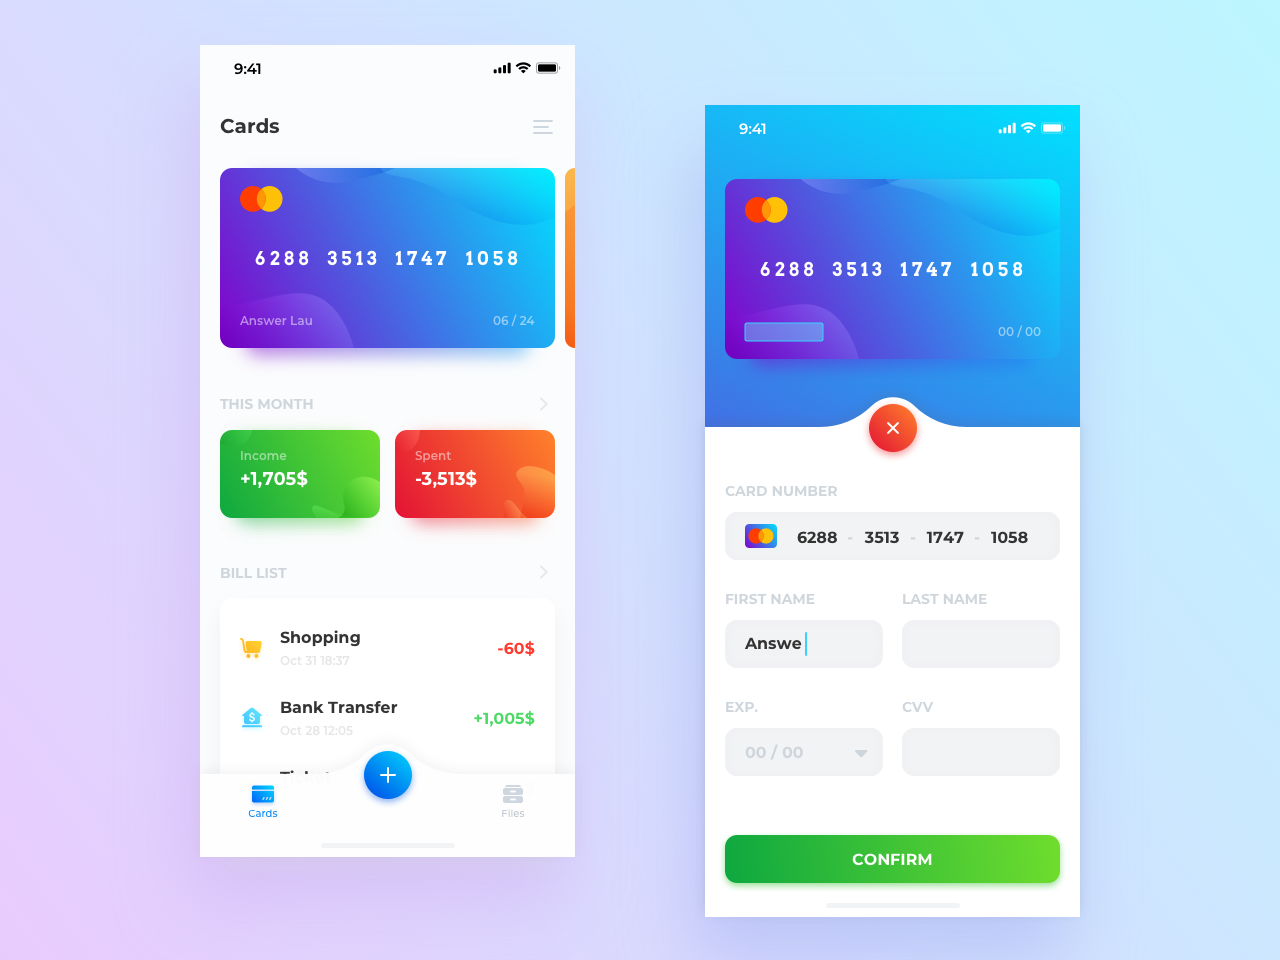 indigo credit card mobile app